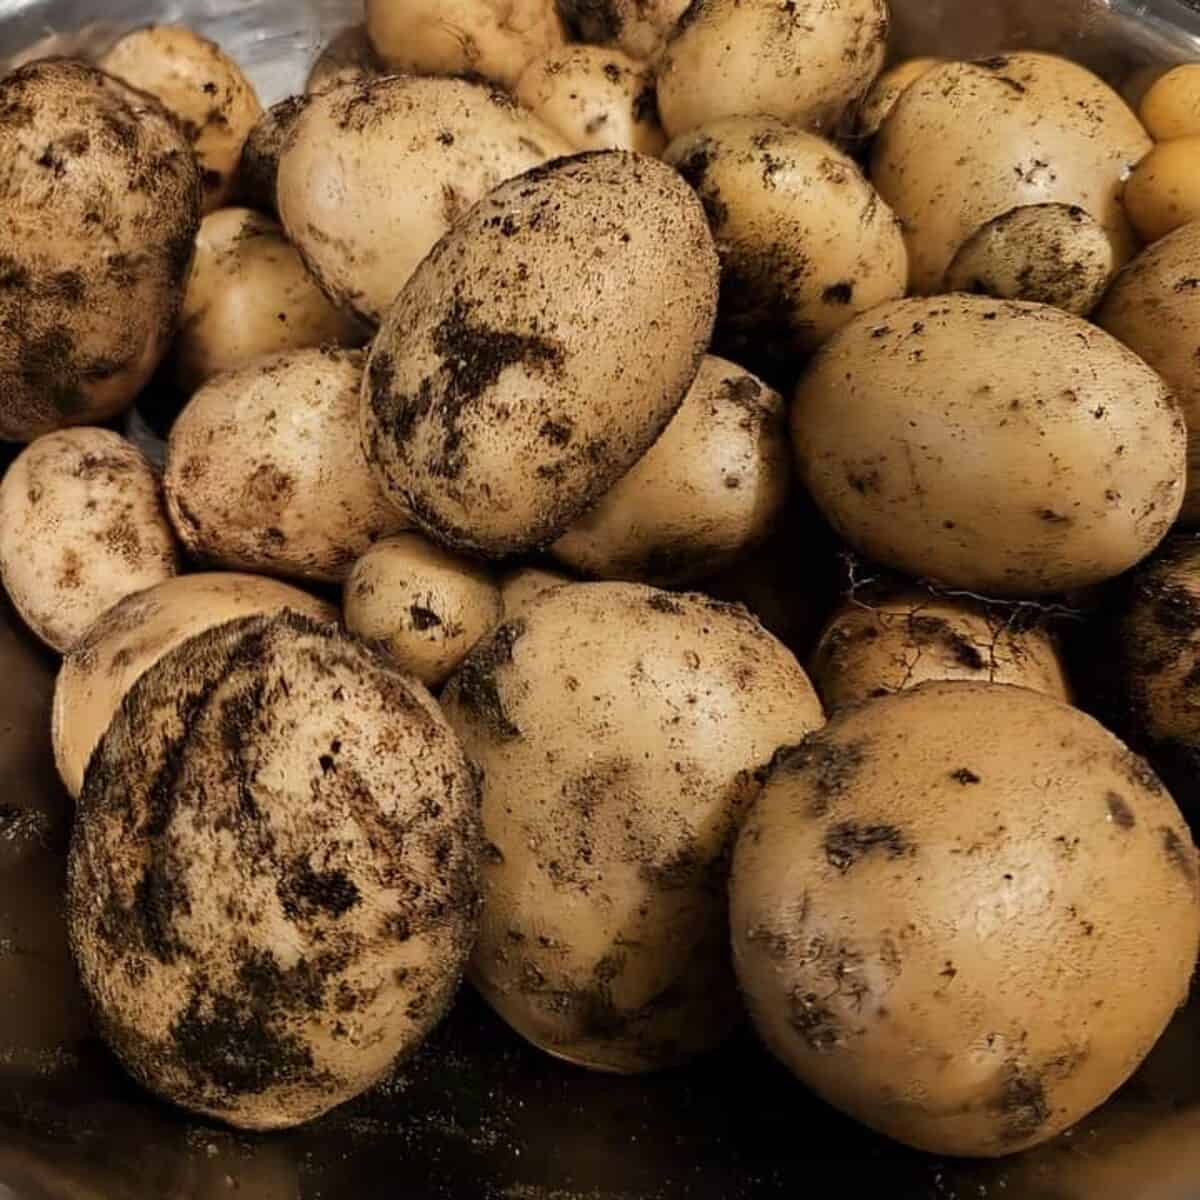 dirty Yukon gold potatoes